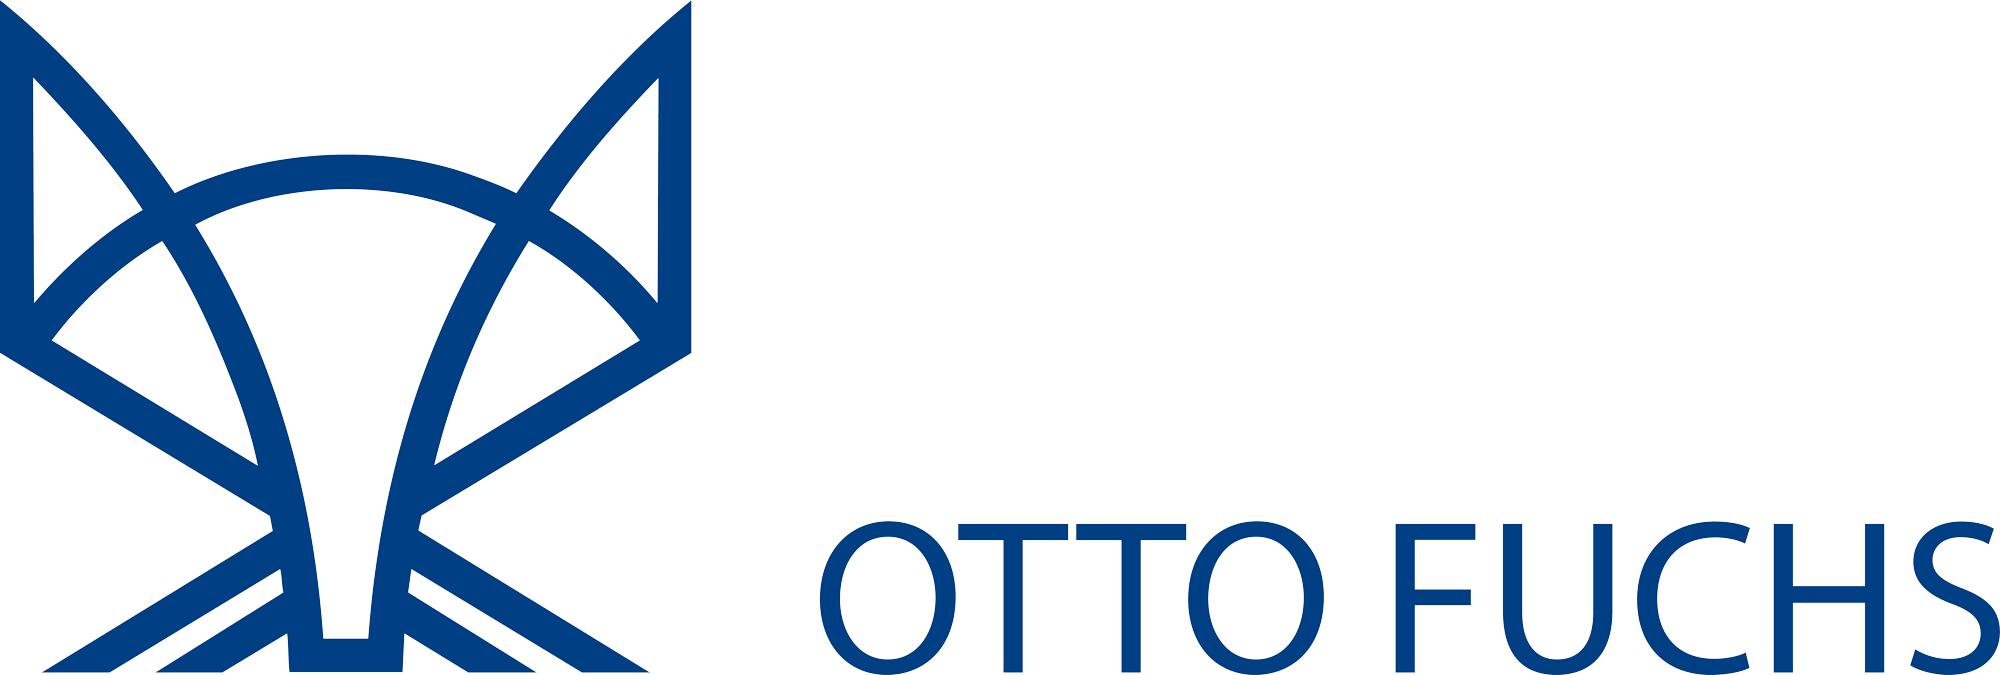 OttoFuchs Logo